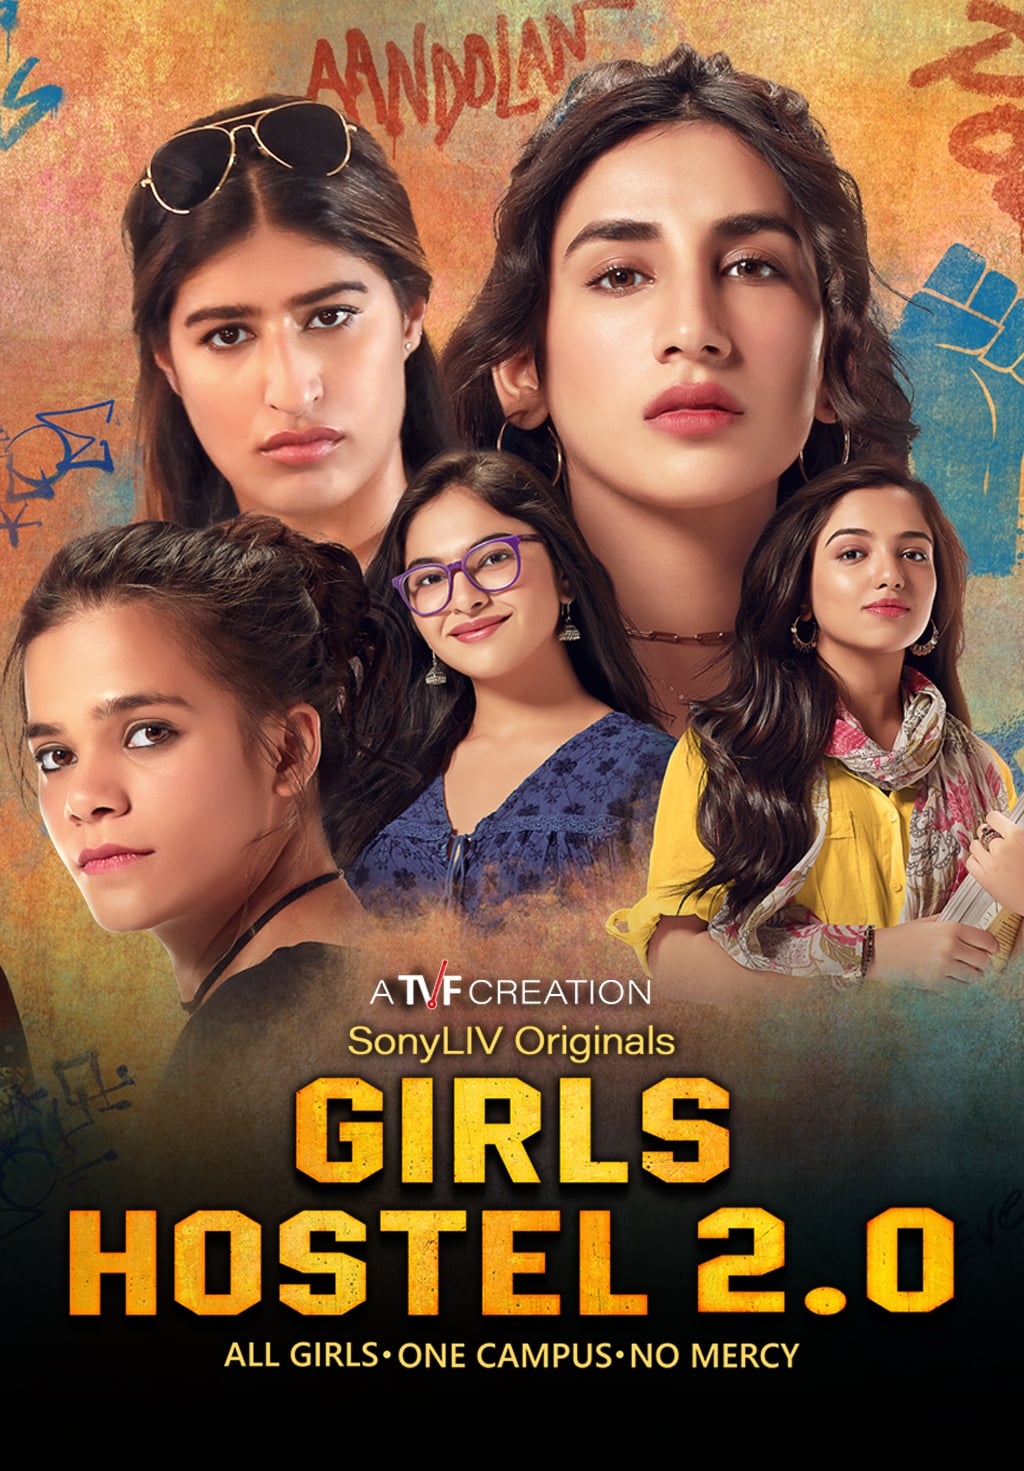 Girls Hostel 2.0 (2021) Hindi Season 2 Complete Watch Online HD